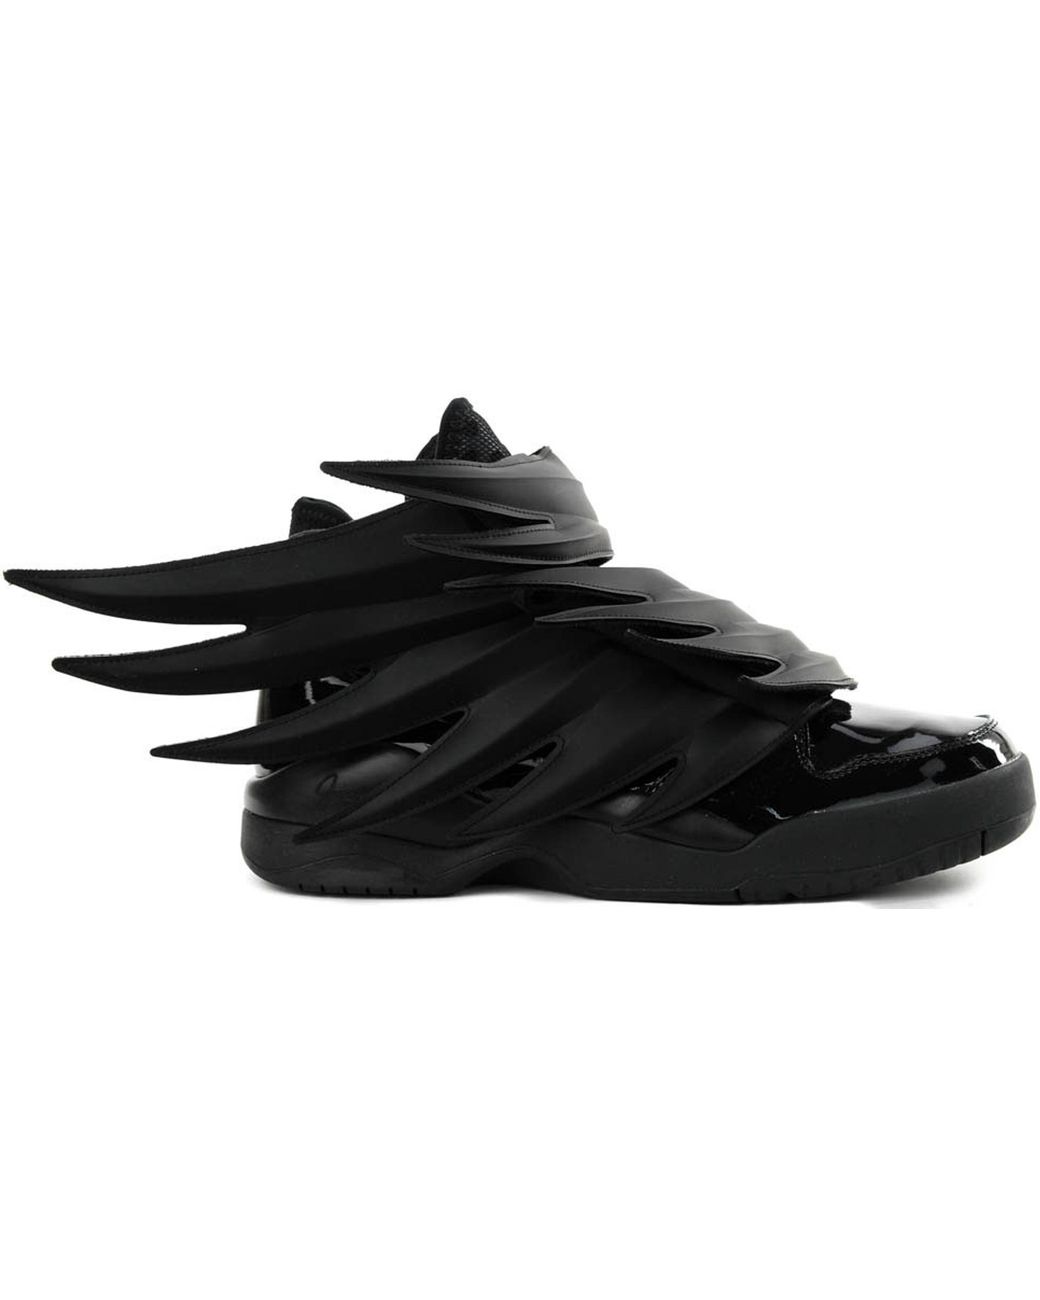 adidas jeremy scott wings dark knight